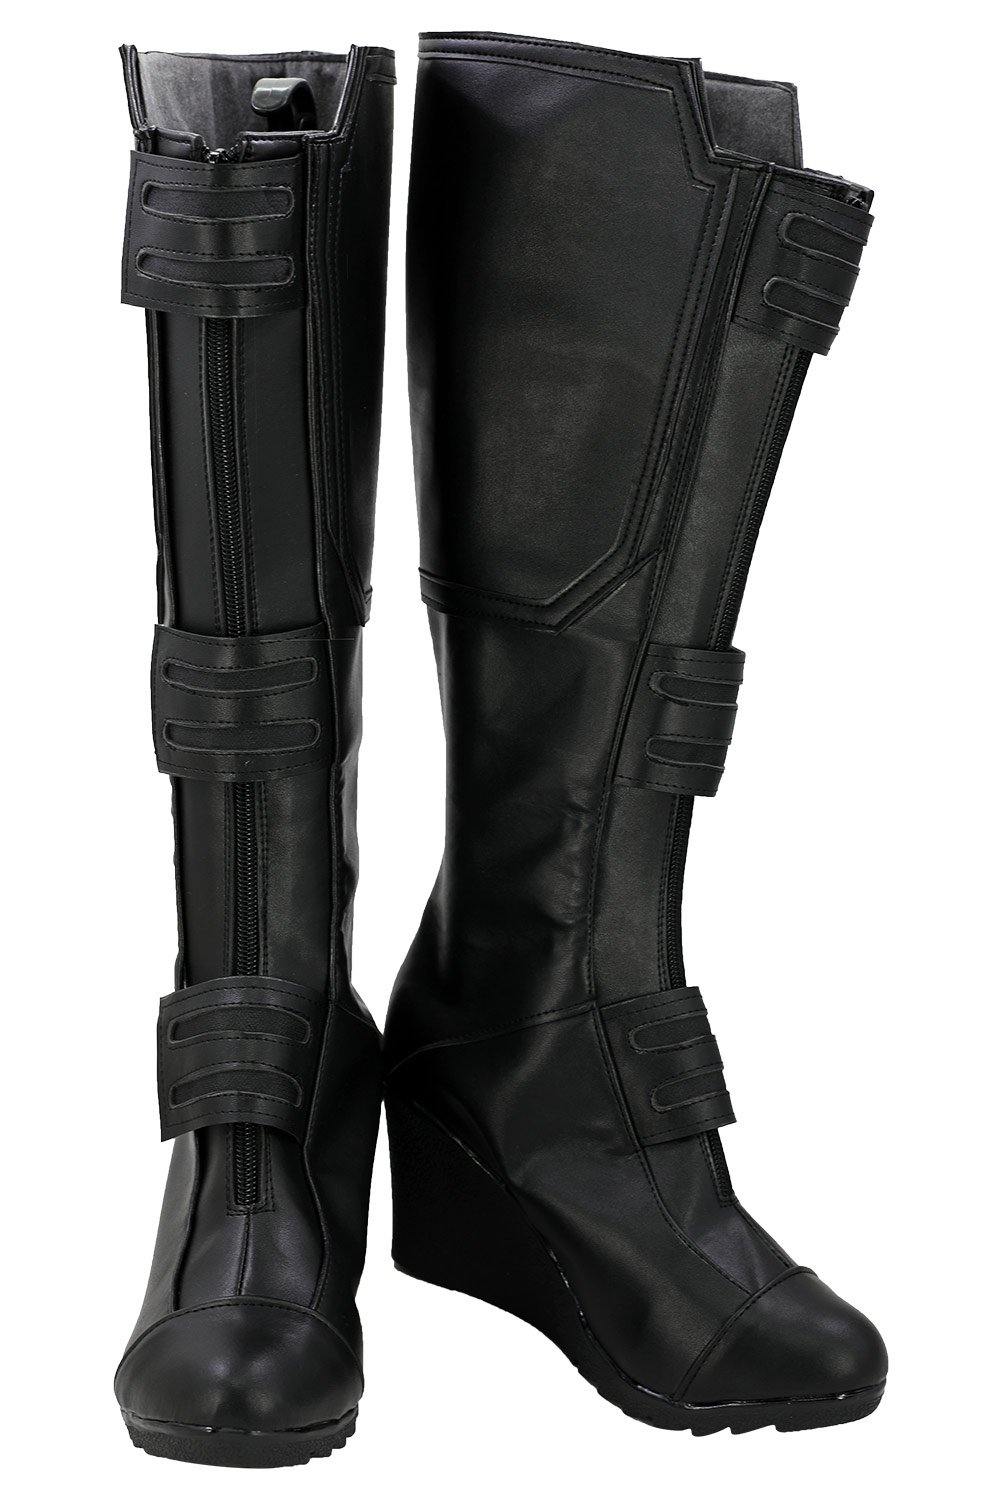 Marvel Avengers 3 Civil War Camptain America Black Widow Cosplay Schuhe Stiefel NEU Version - cosplaycartde